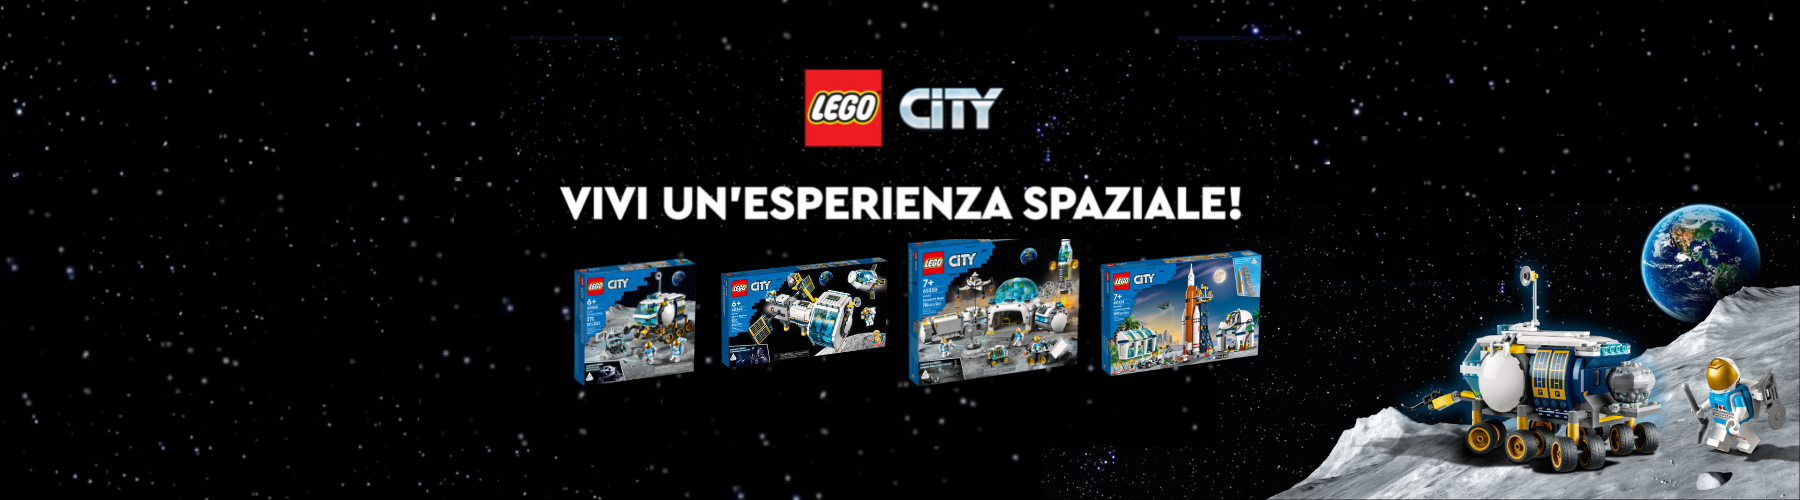 LEGO City Space - Vinci un viaggio in Florida al Kennedy Space Center!